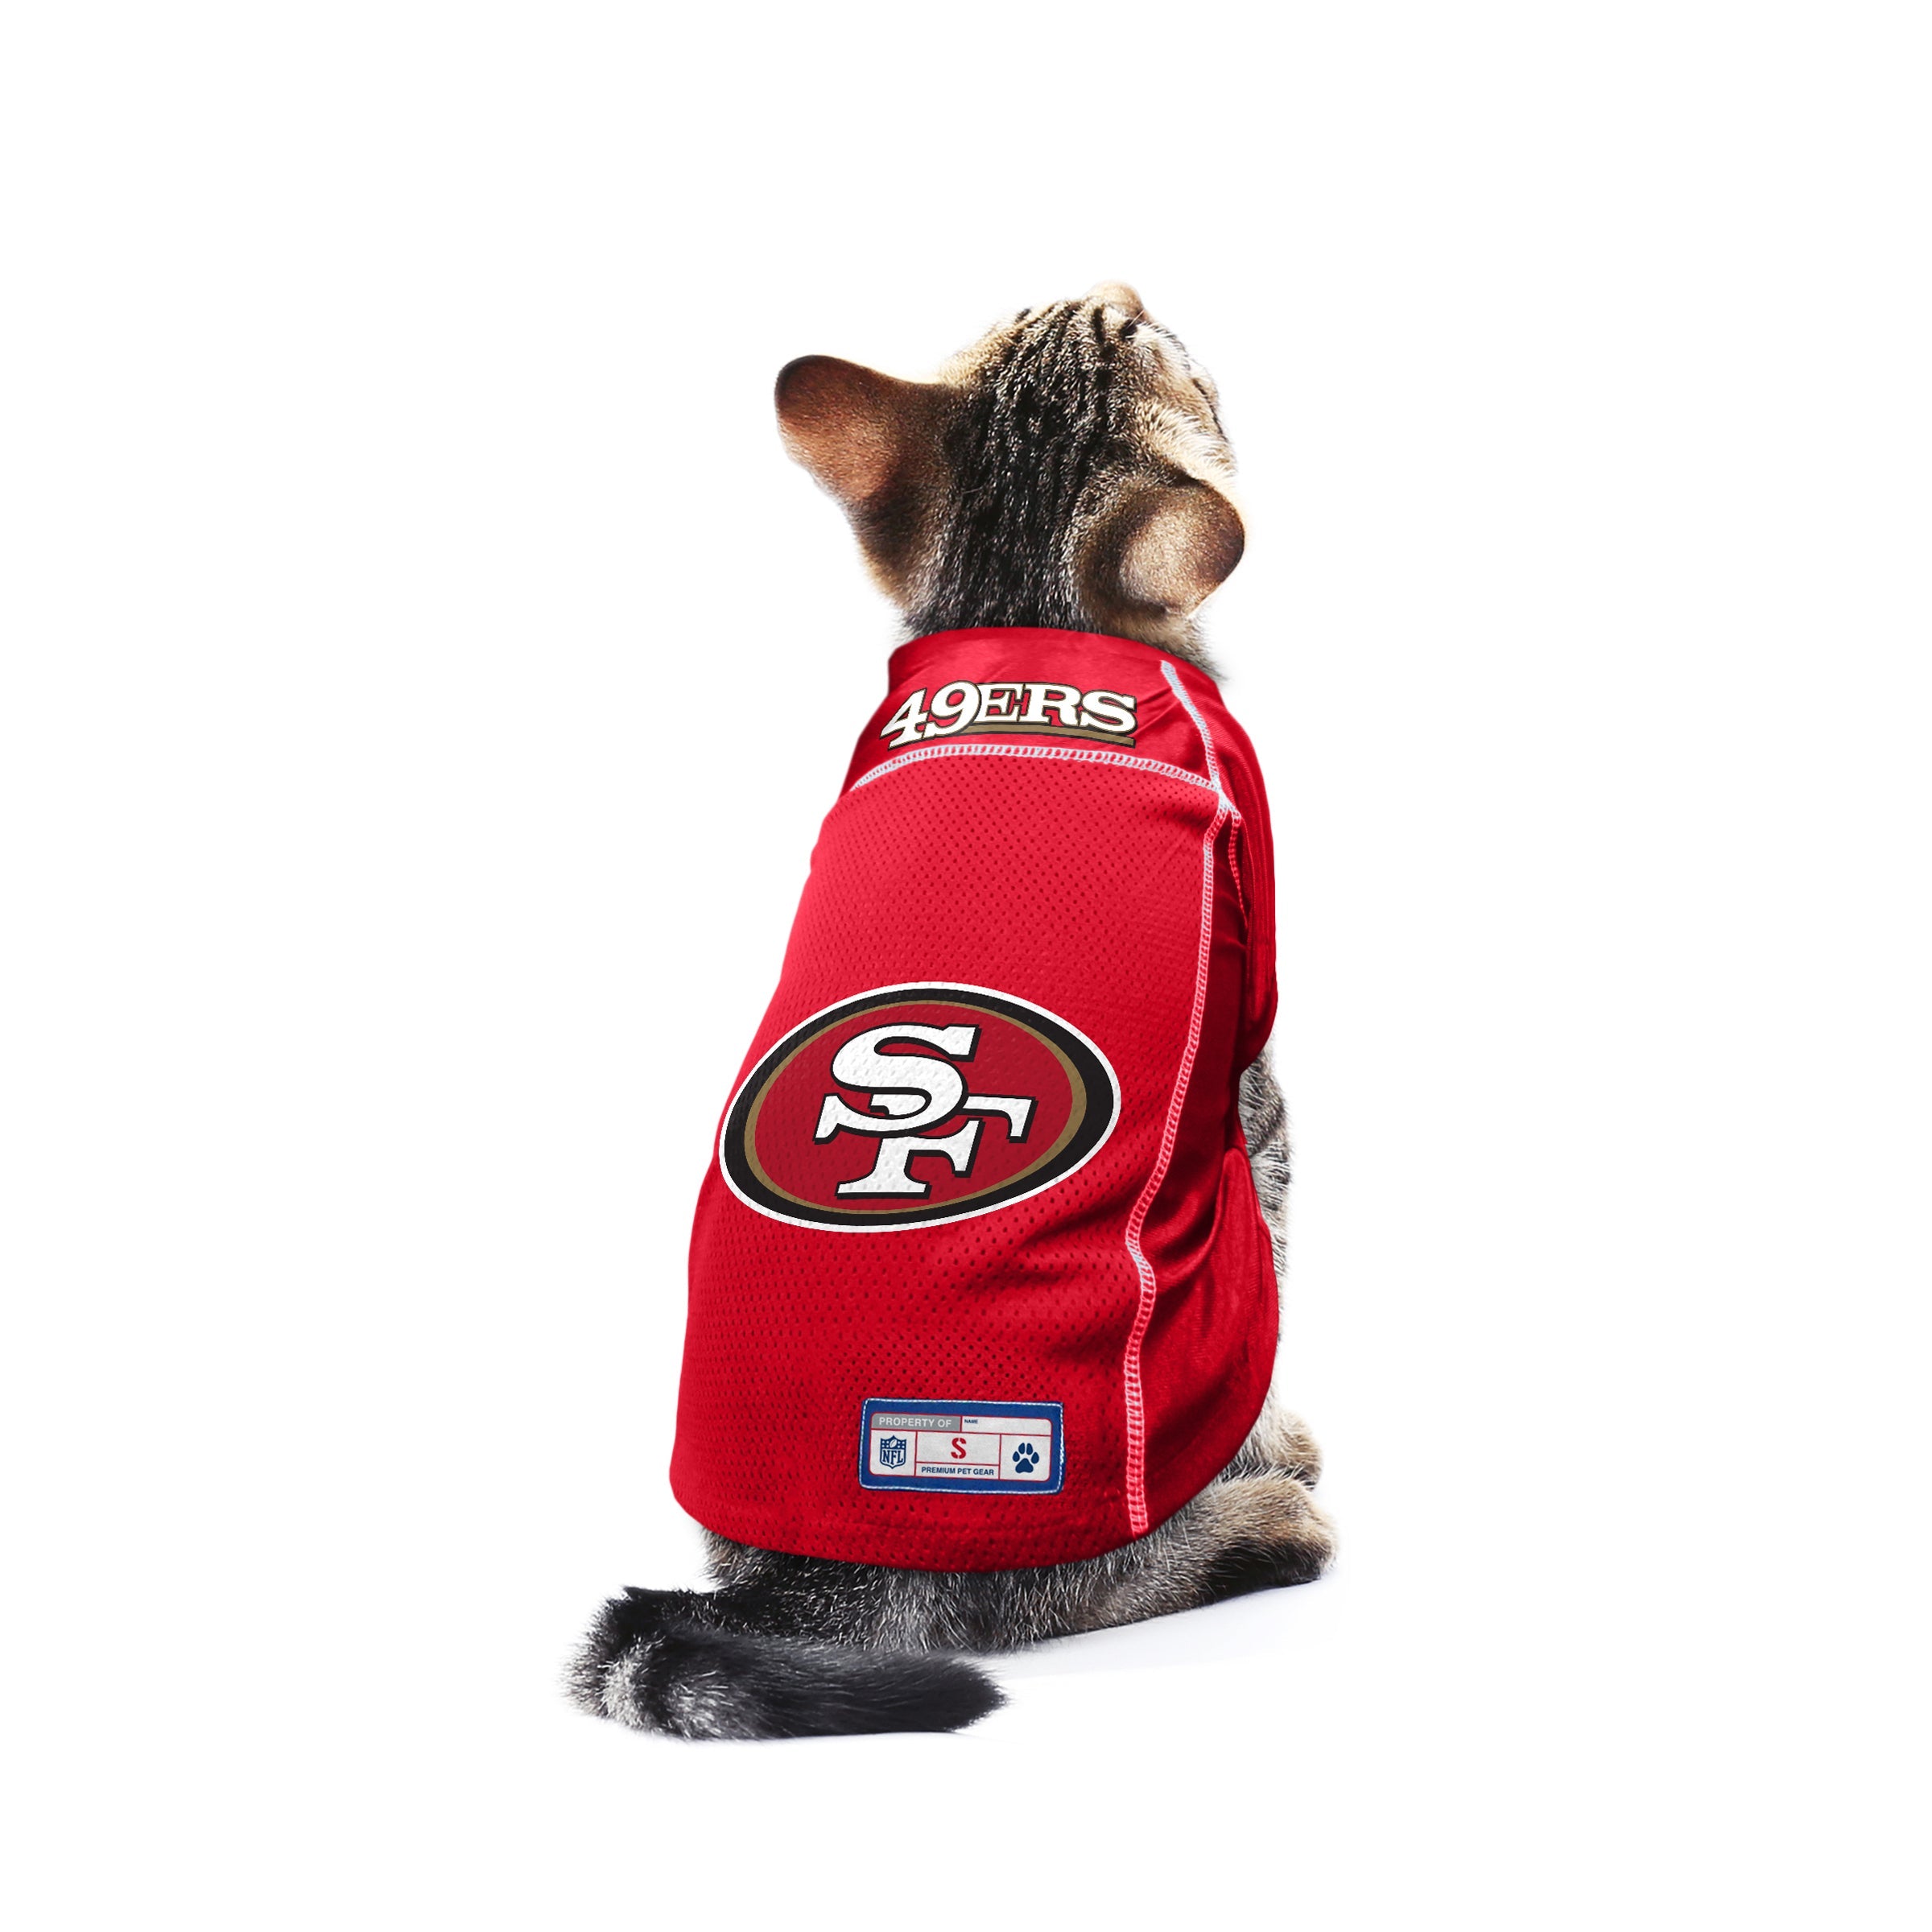 49ers cat jersey